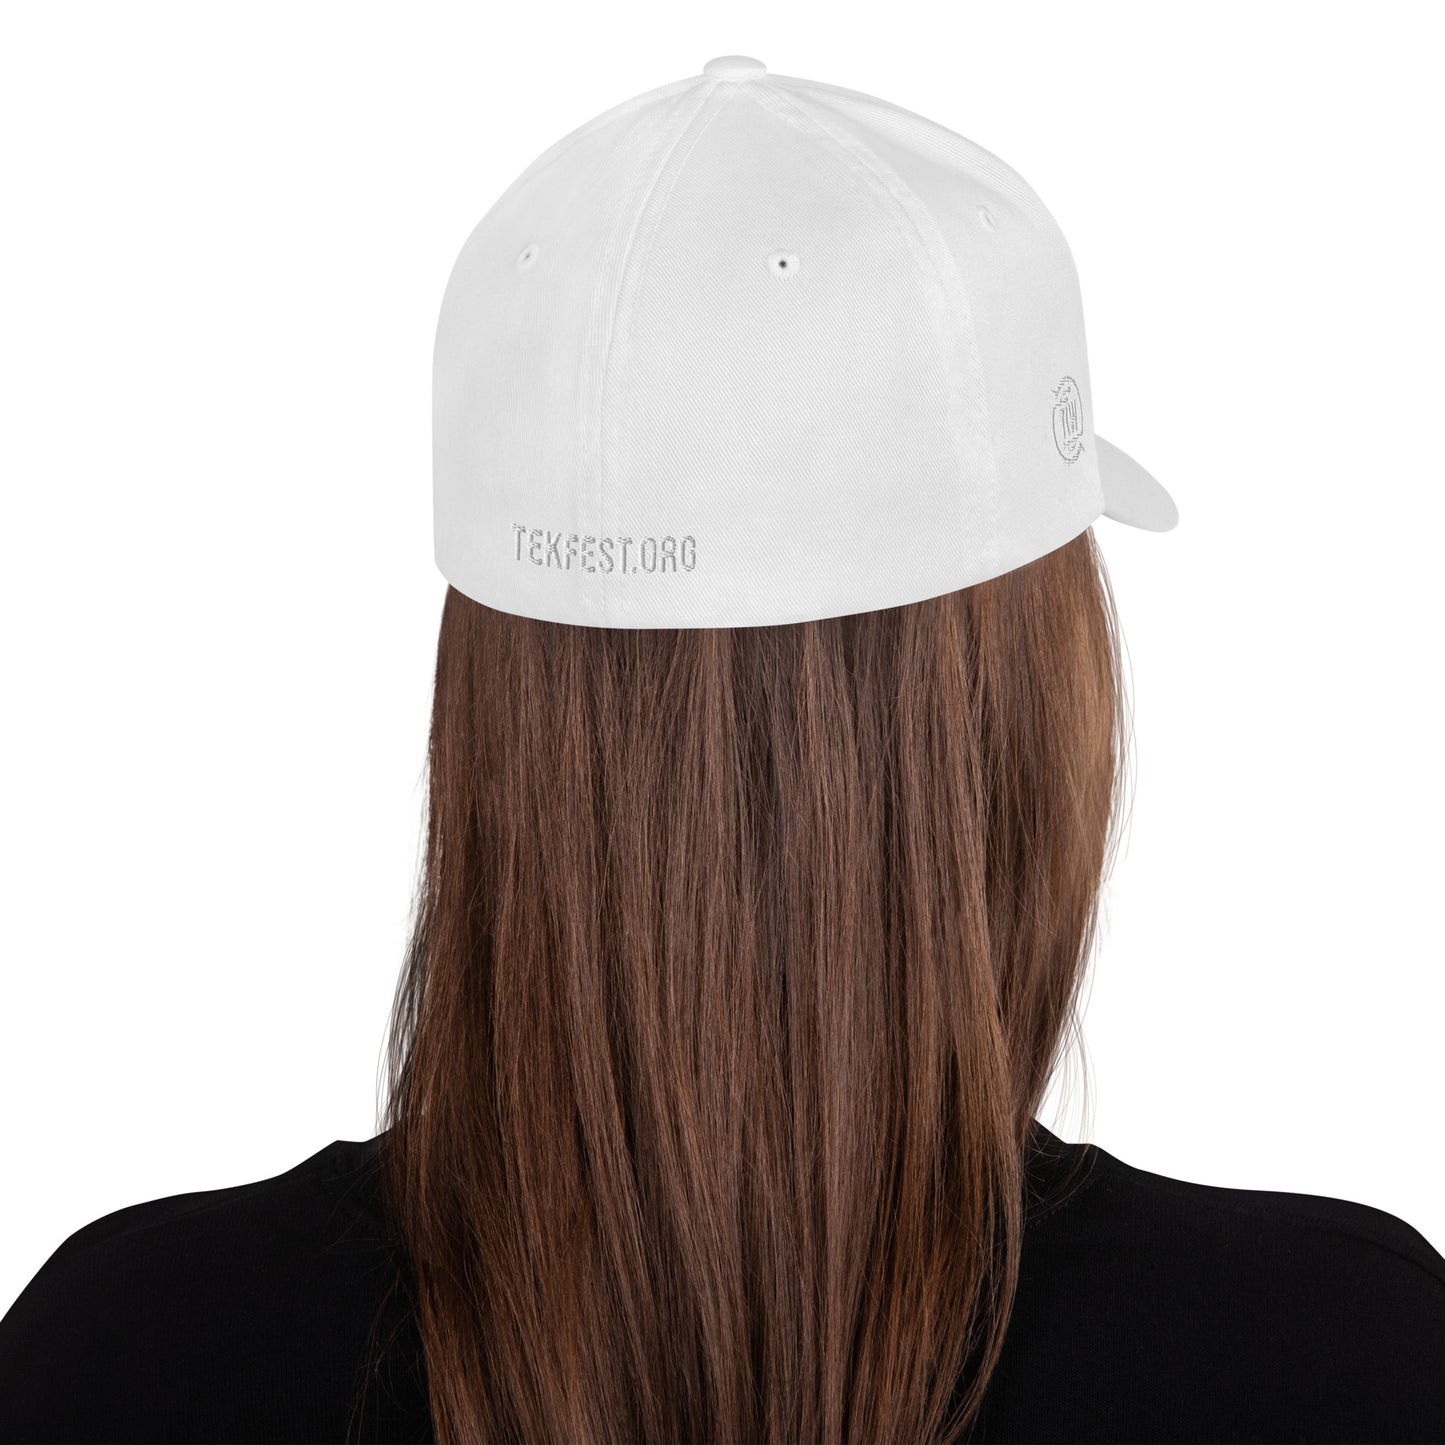 TEKFest24 WhiteOut FlexFit Hat